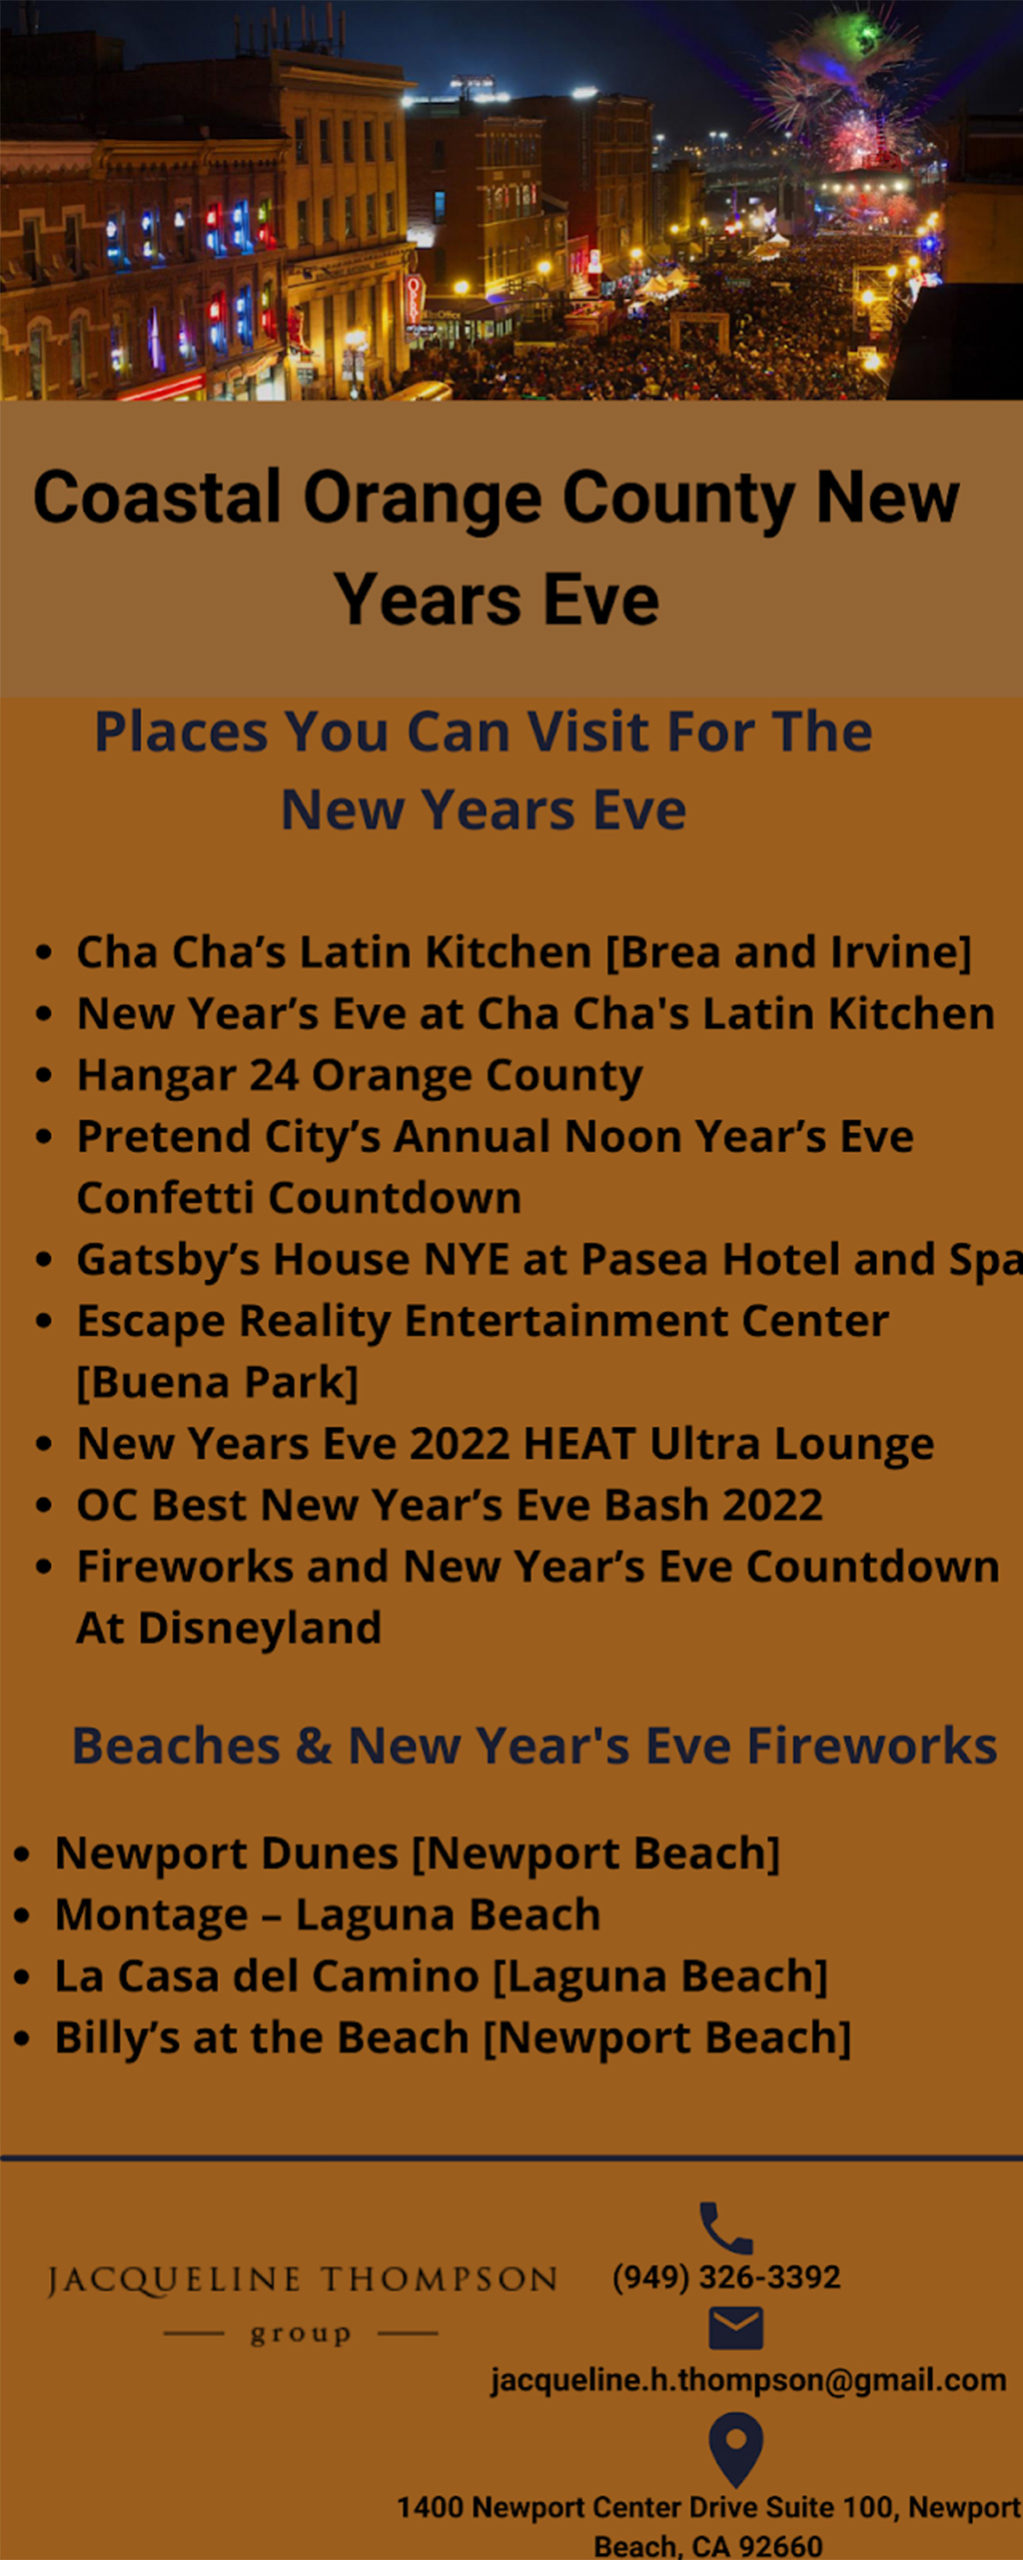 Coastal Orange County New Years Eve infographic